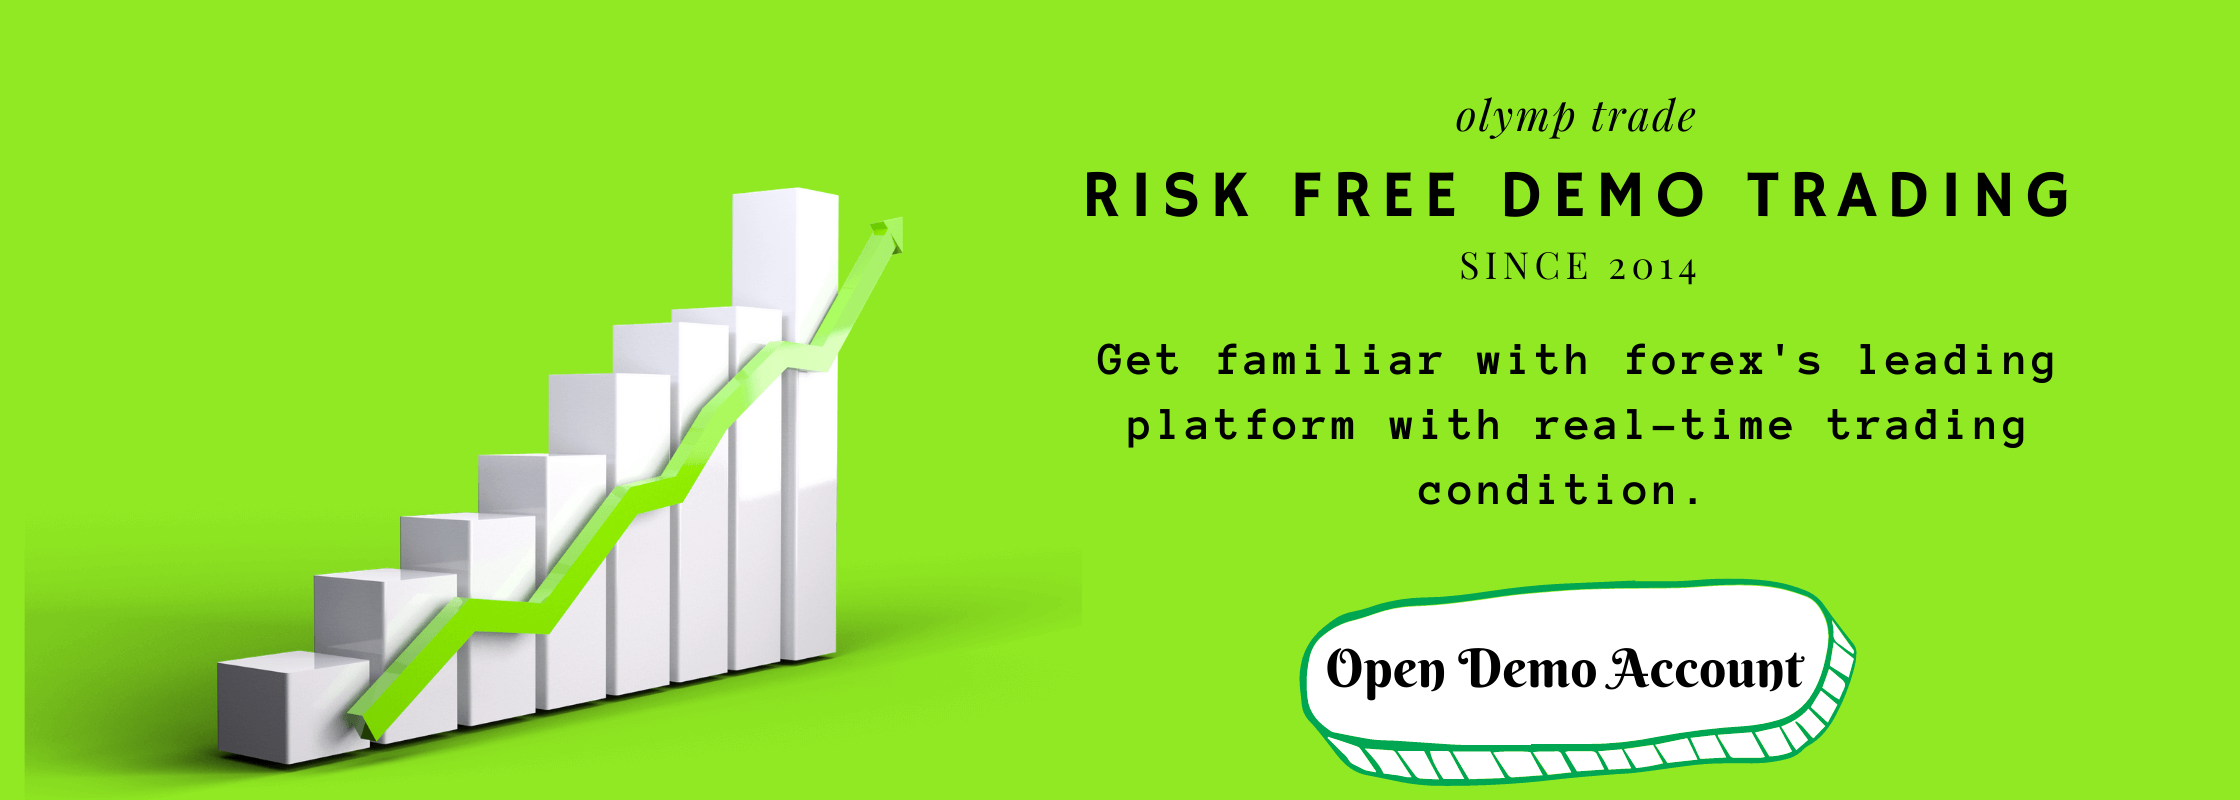 risk free demo trading